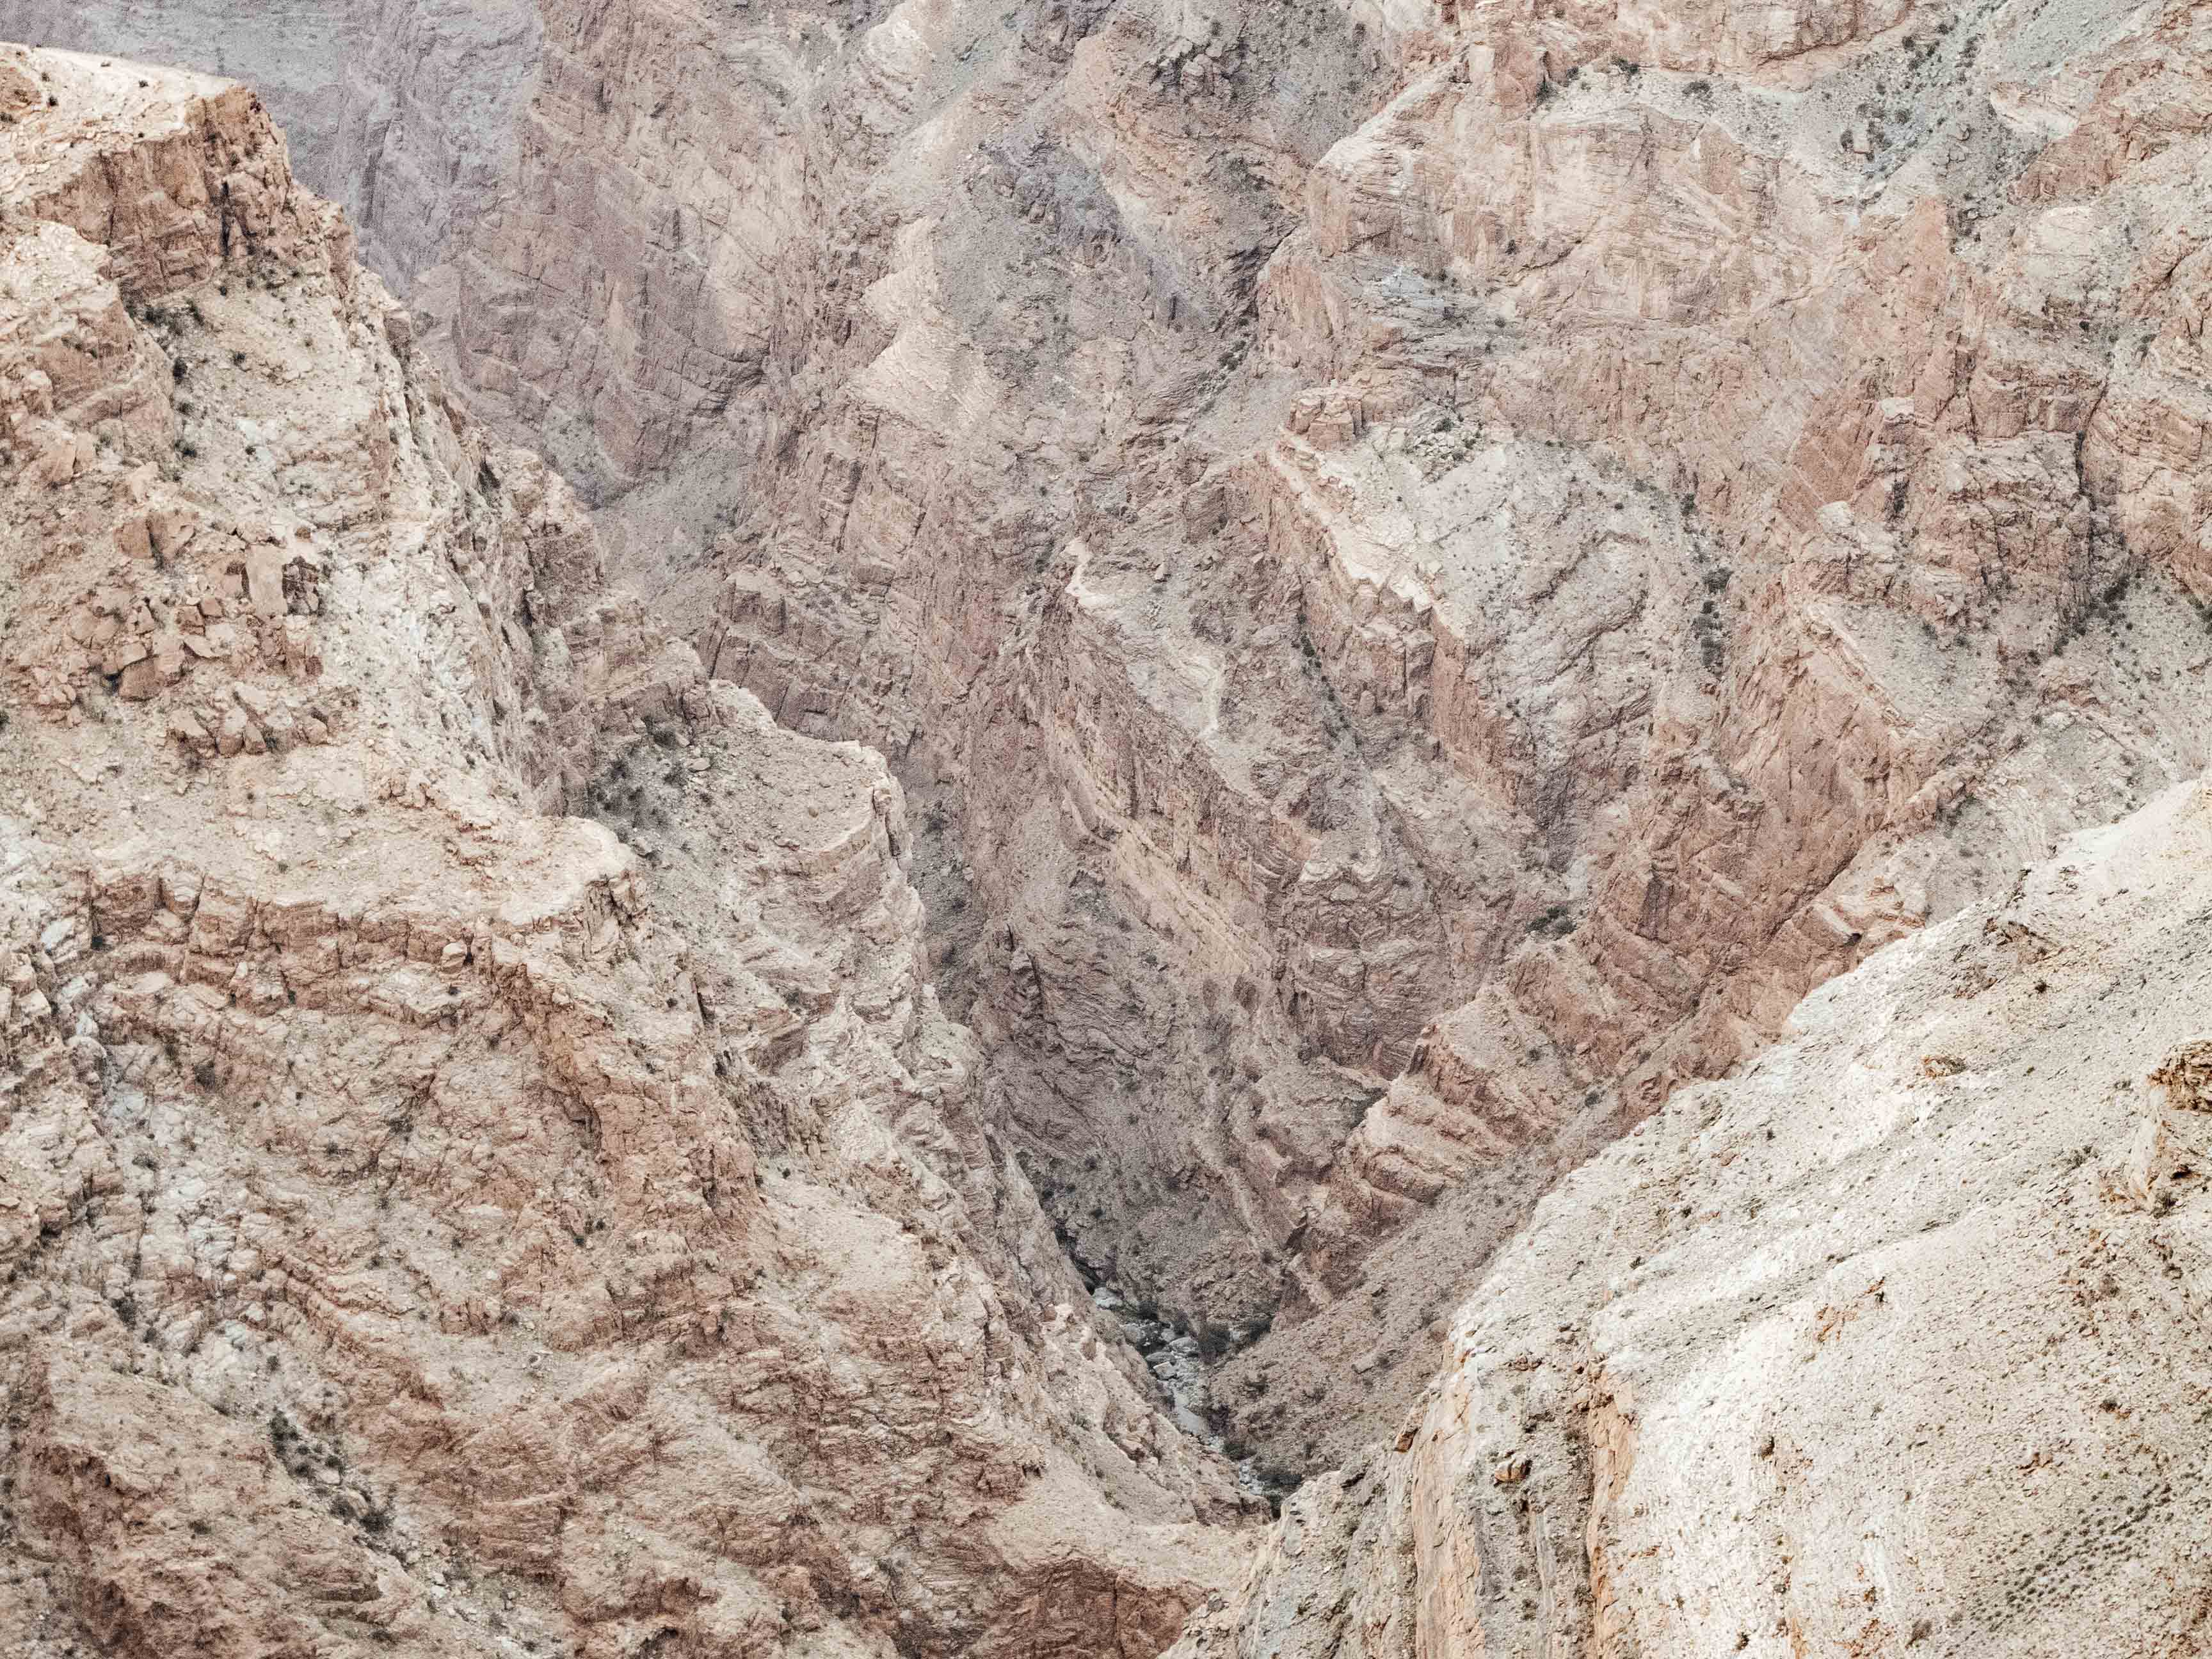 Steep, rocky slopes into a canyon on Jebel Akhdar